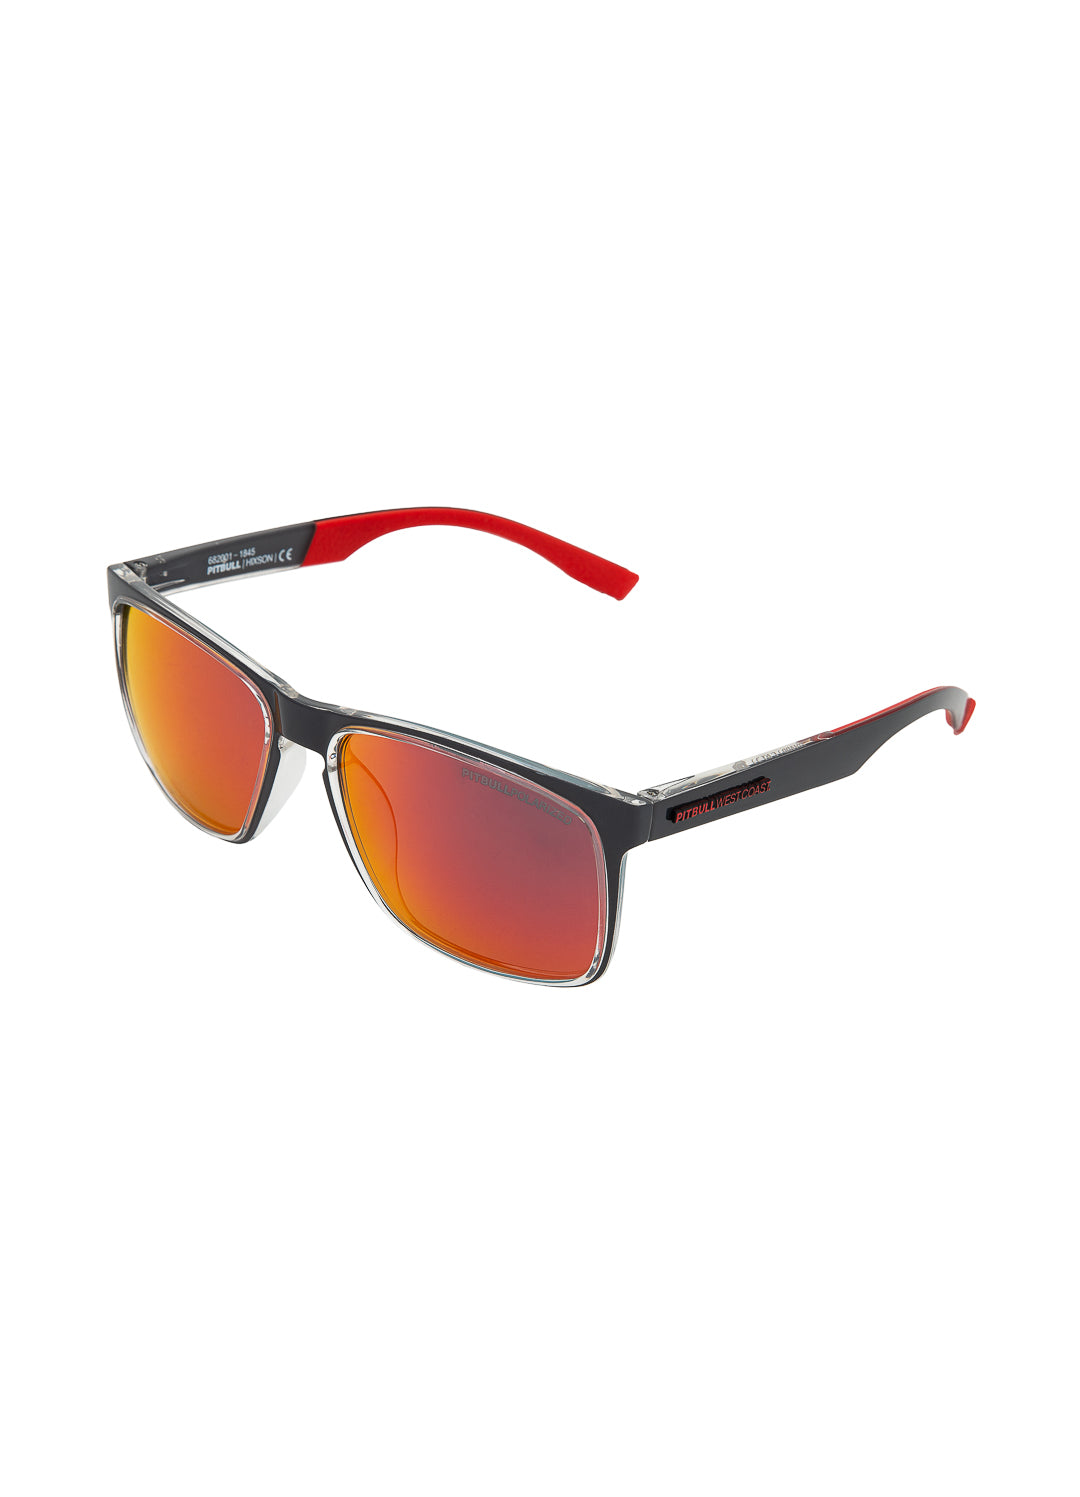 Sunglasses HIXSON Grey/Red - Pitbull West Coast International Store 